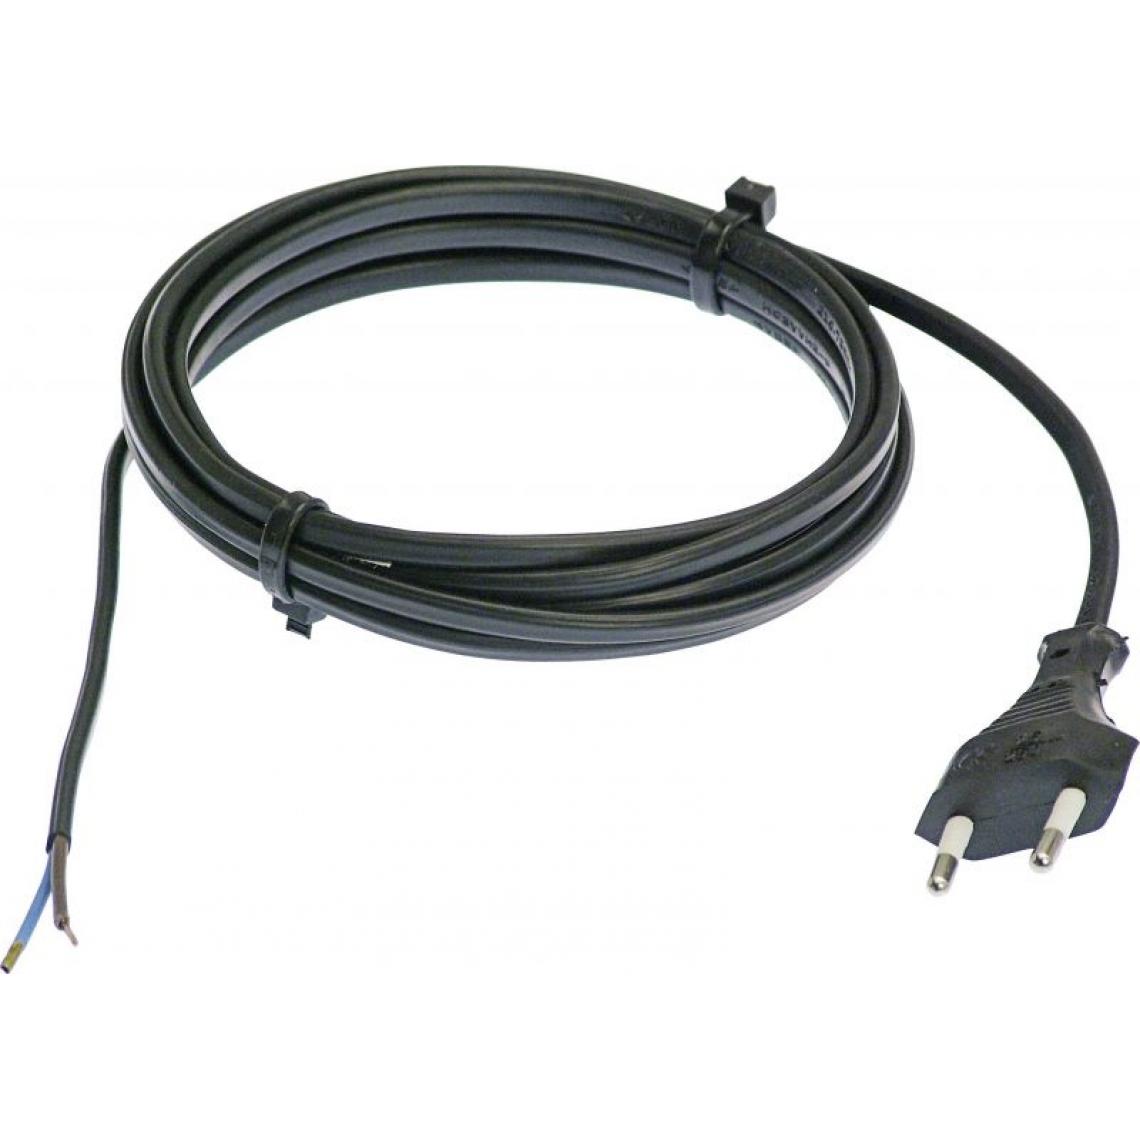 Inconnu - as – Schwabe Câble de raccordement H03VVH2-F 2 x 0,75, 1,5 m, Noir, 70642 - Câble antenne